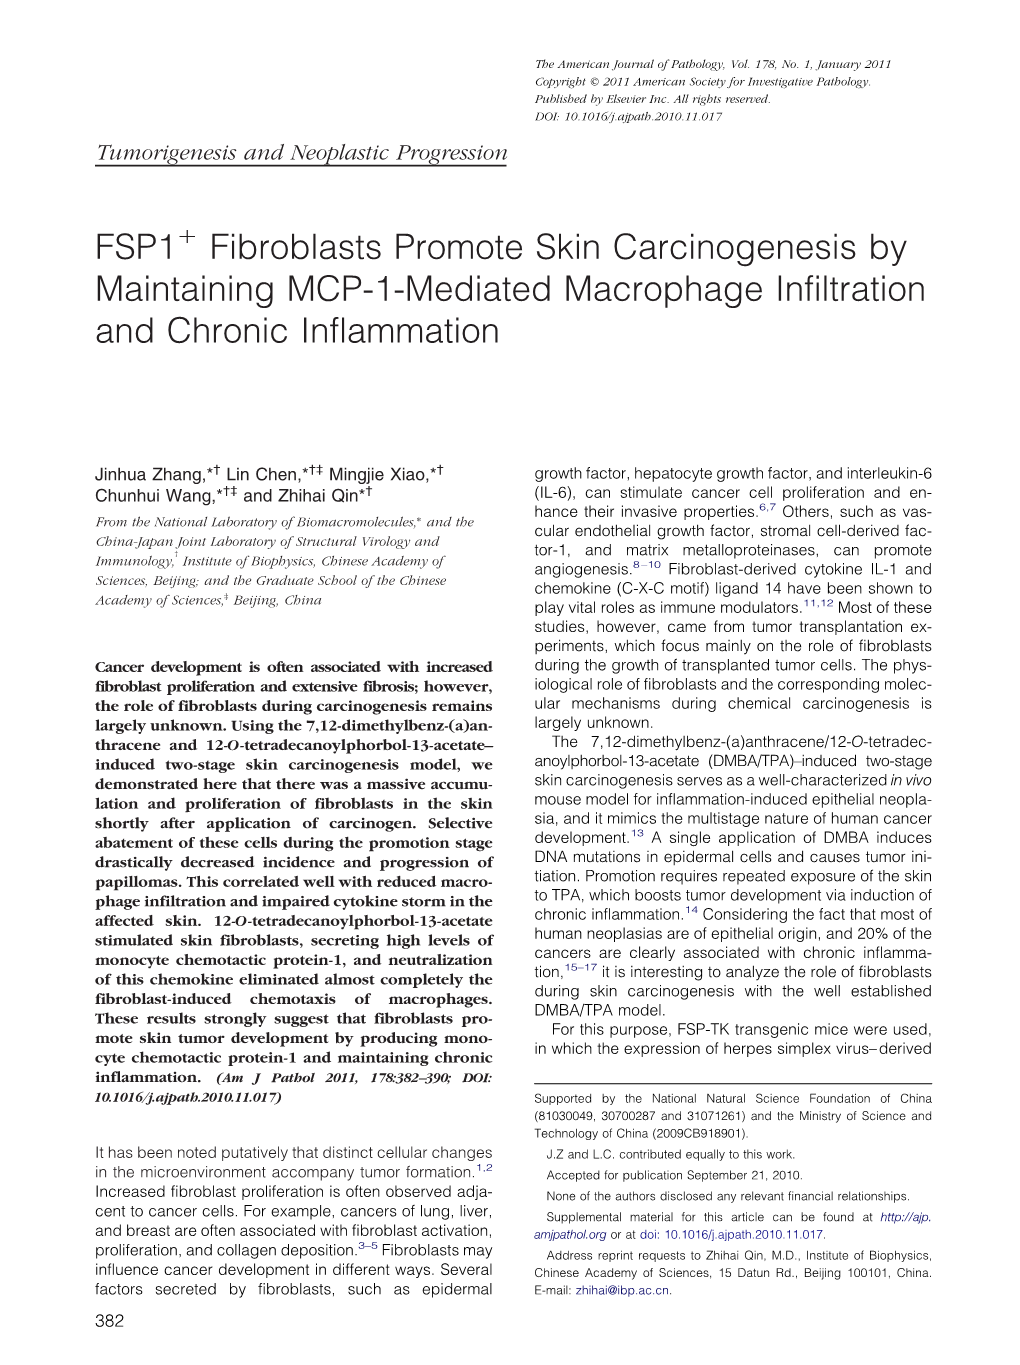 FSP1 Fibroblasts Promote Skin Carcinogenesis by Maintaining